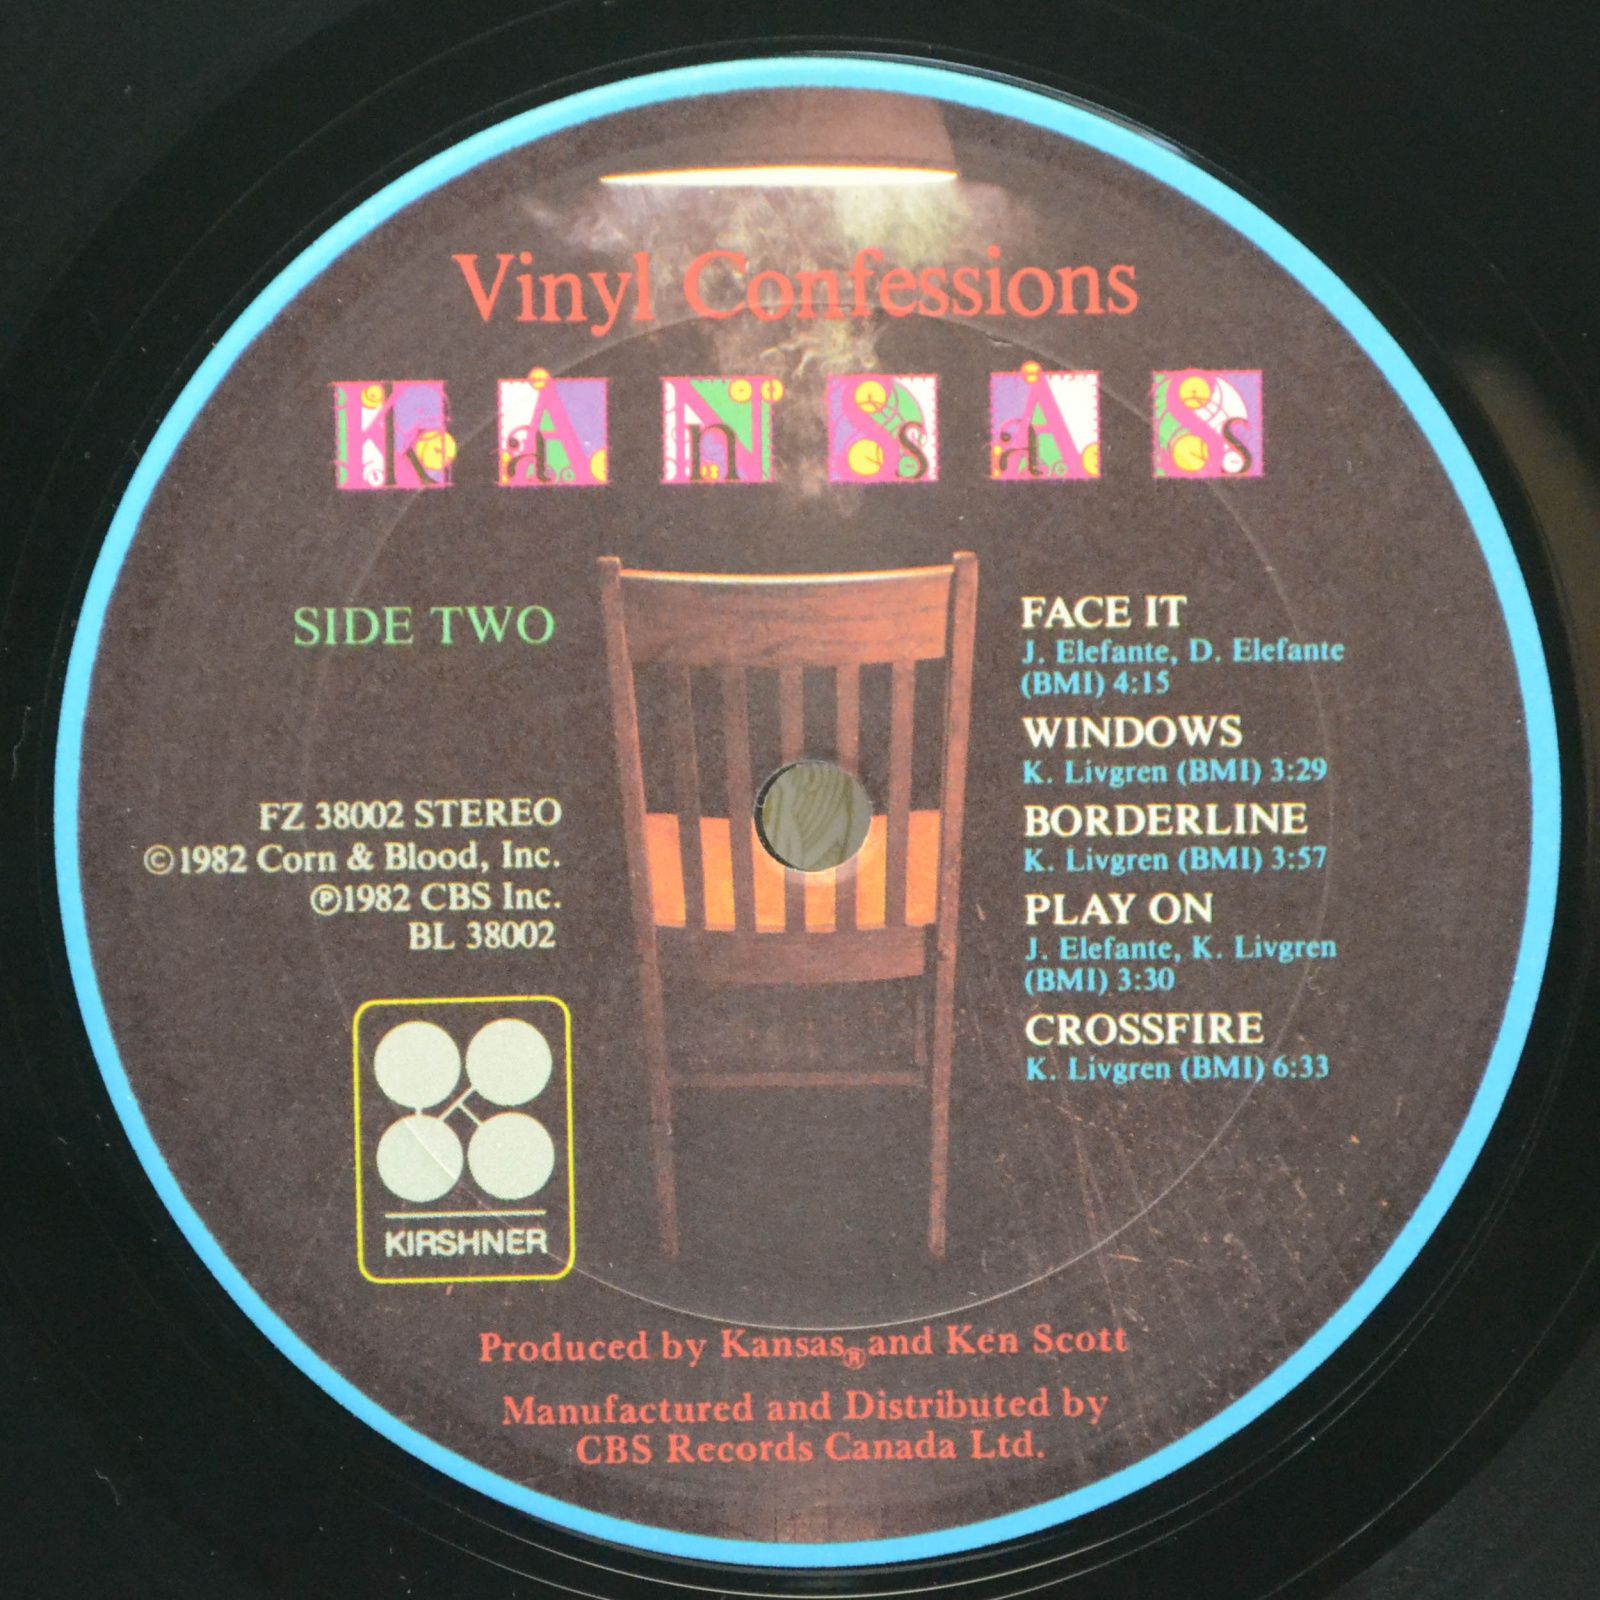 Kansas — Vinyl Confessions, 1982